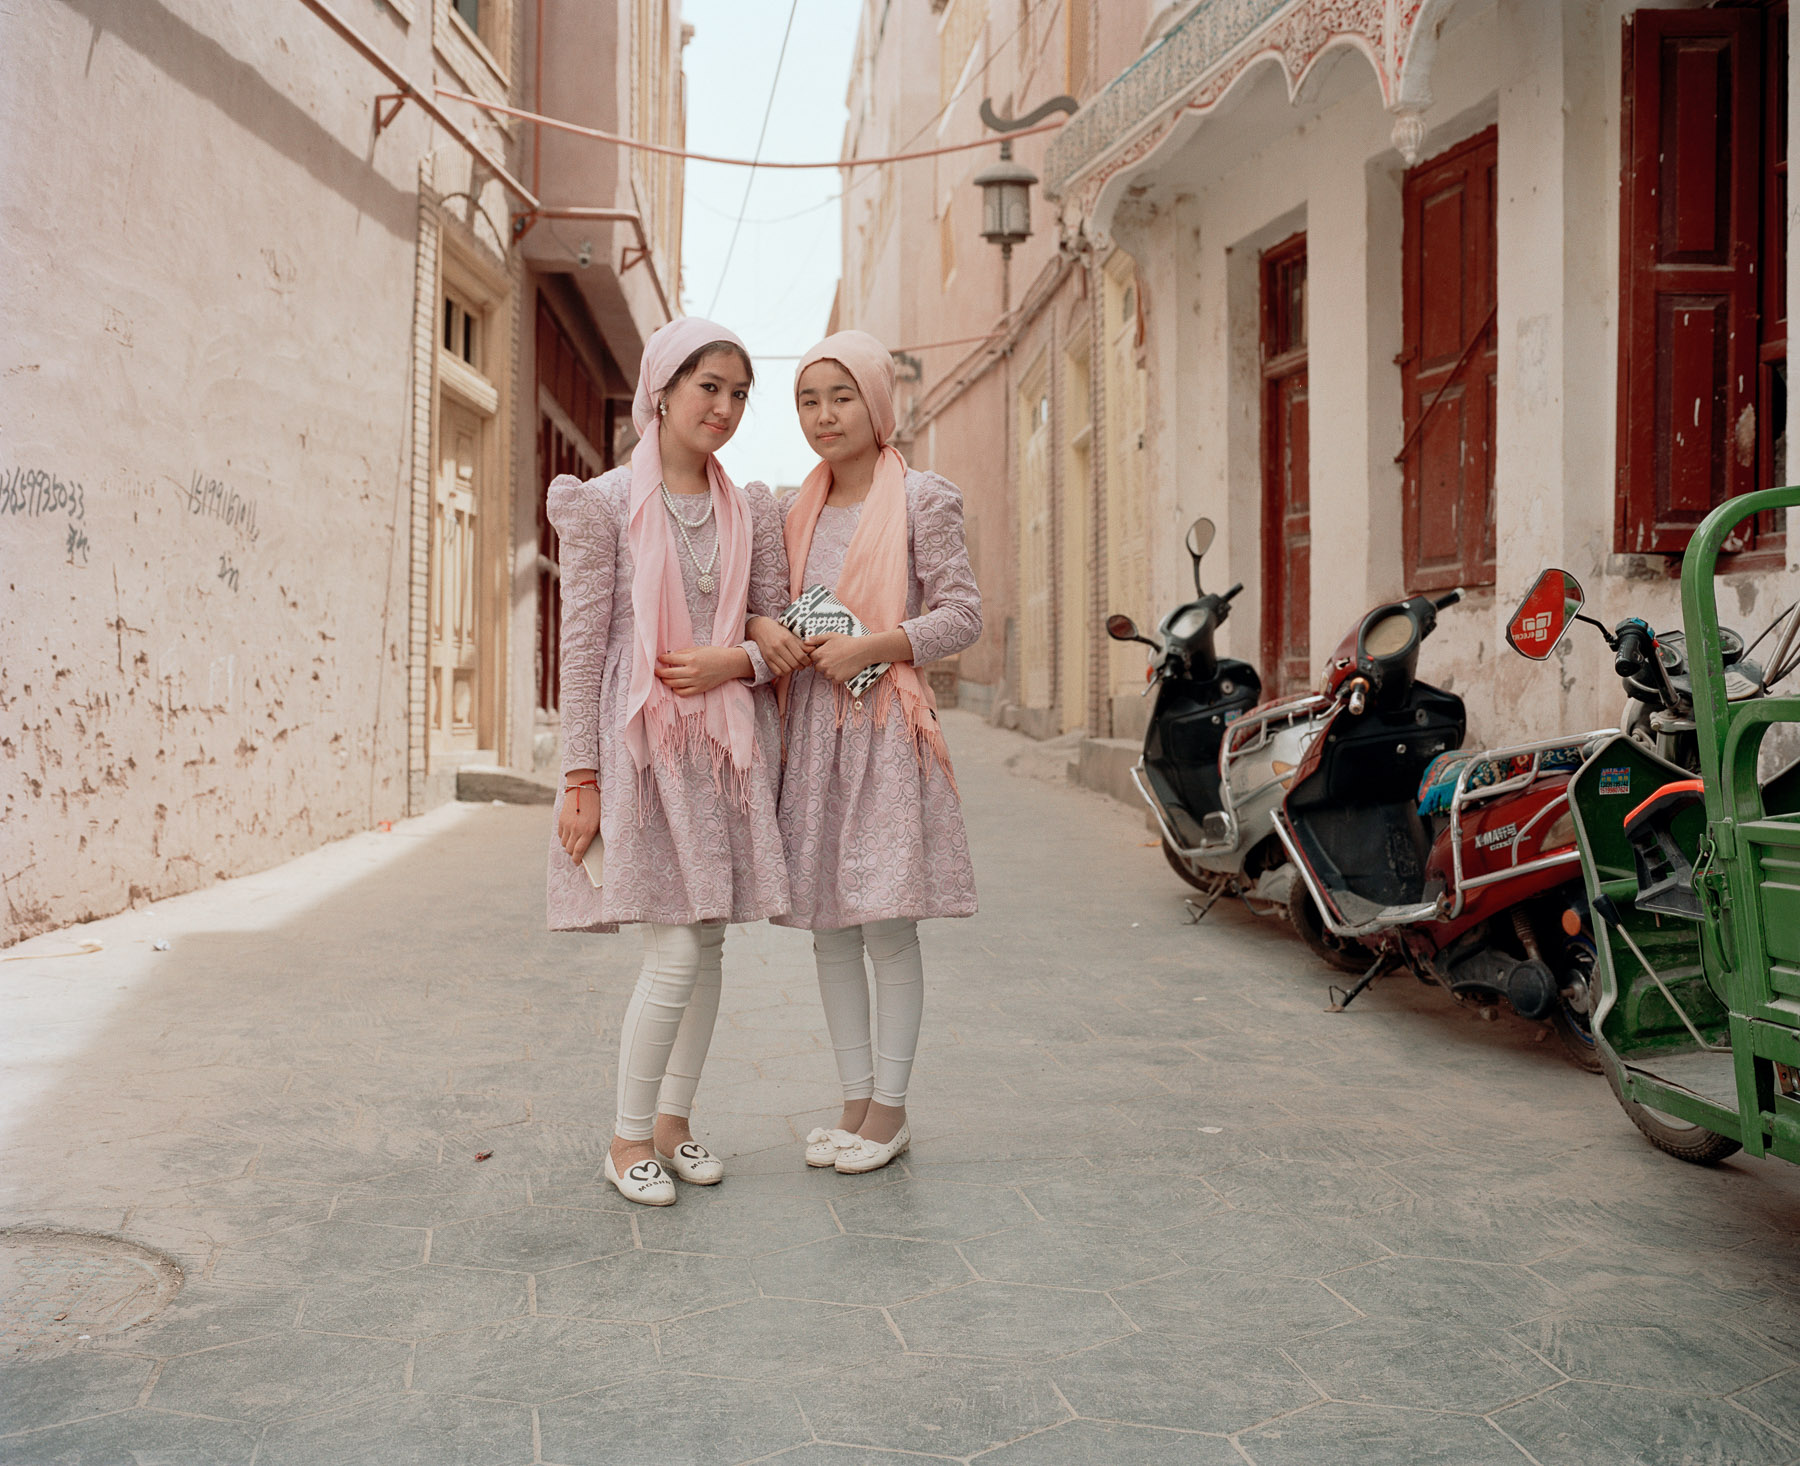  May 2016. Xinjiang province, China. Two Uighur girls inside the old city of Kashgar.  